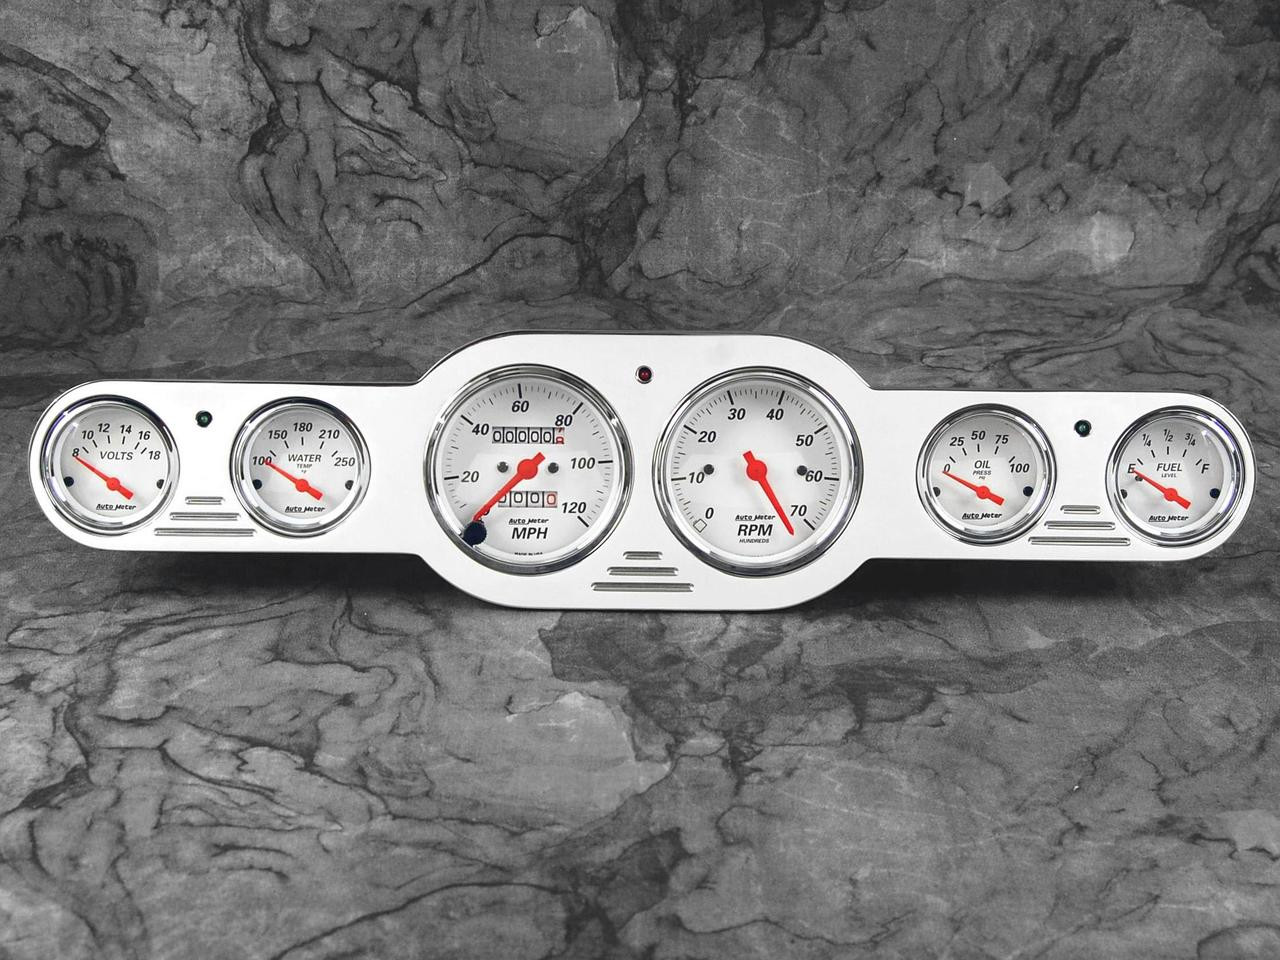 Universal 6 gauge street rod dash insert w/ Auto Meter Arctic White gauges. (Measures 19 7/16" x 4 7/16")